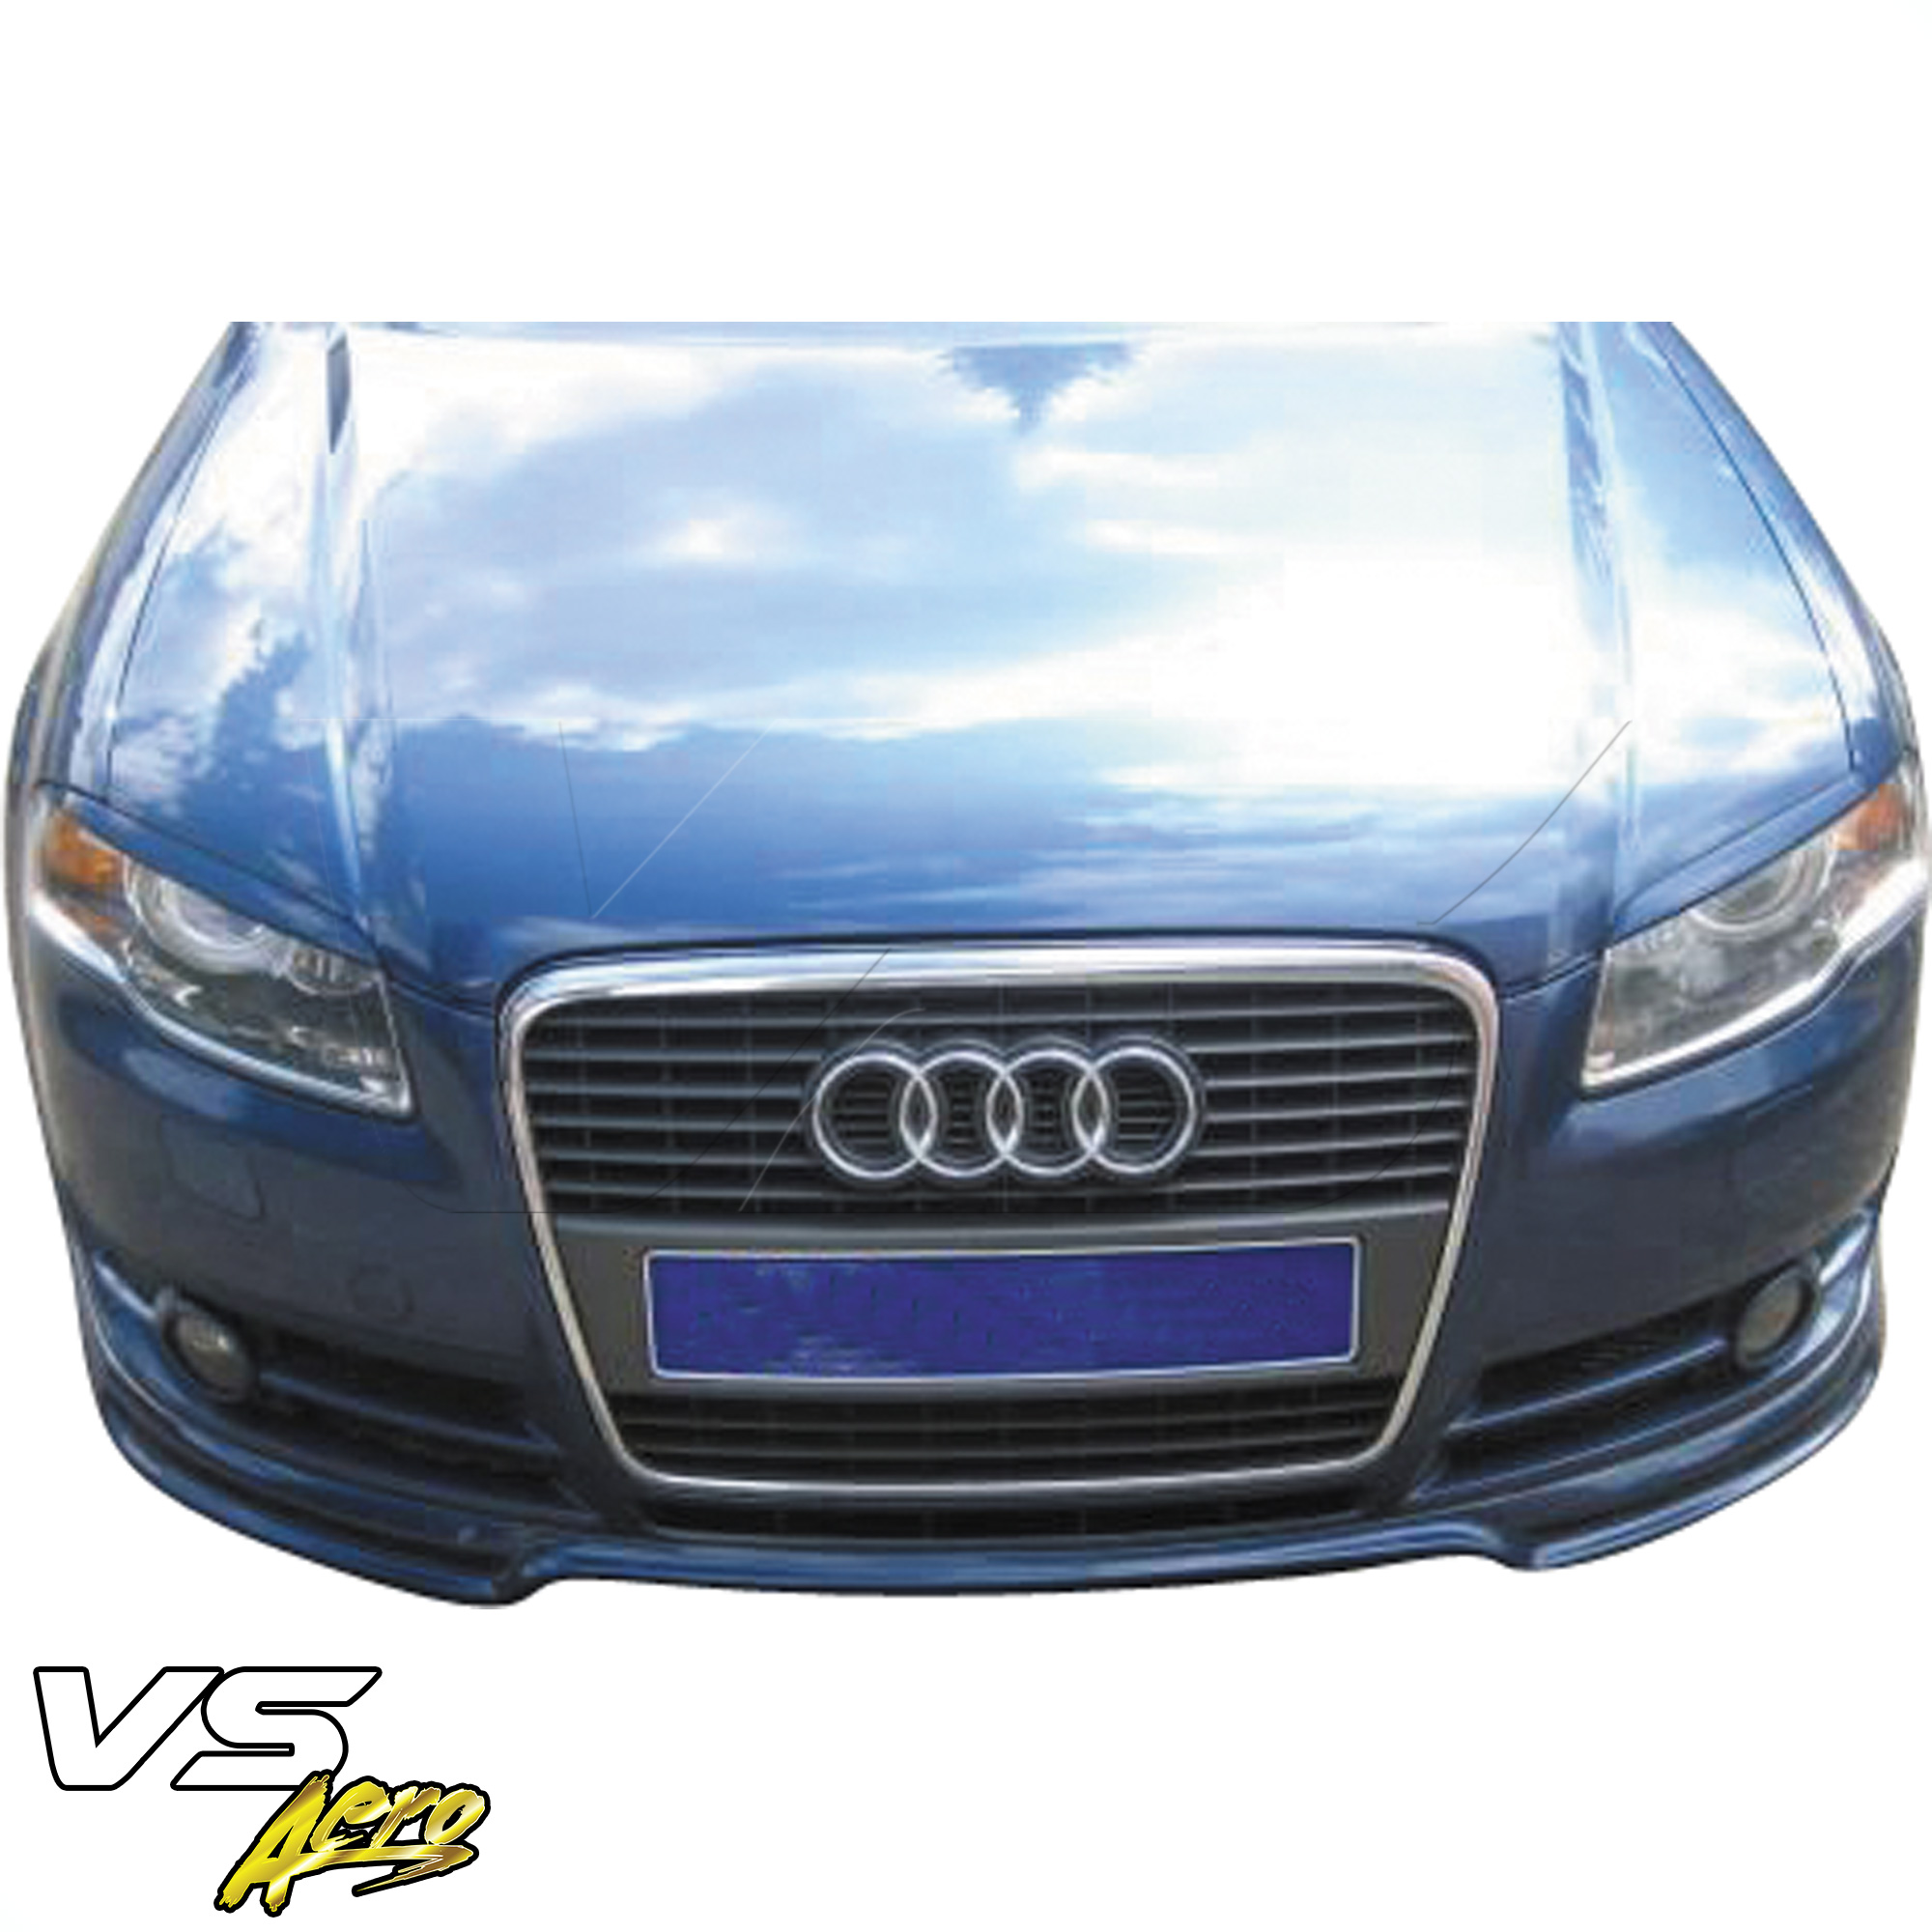 VSaero FRP AB Front Lip Valance > Audi A4 B7 2006-2008 - Image 3